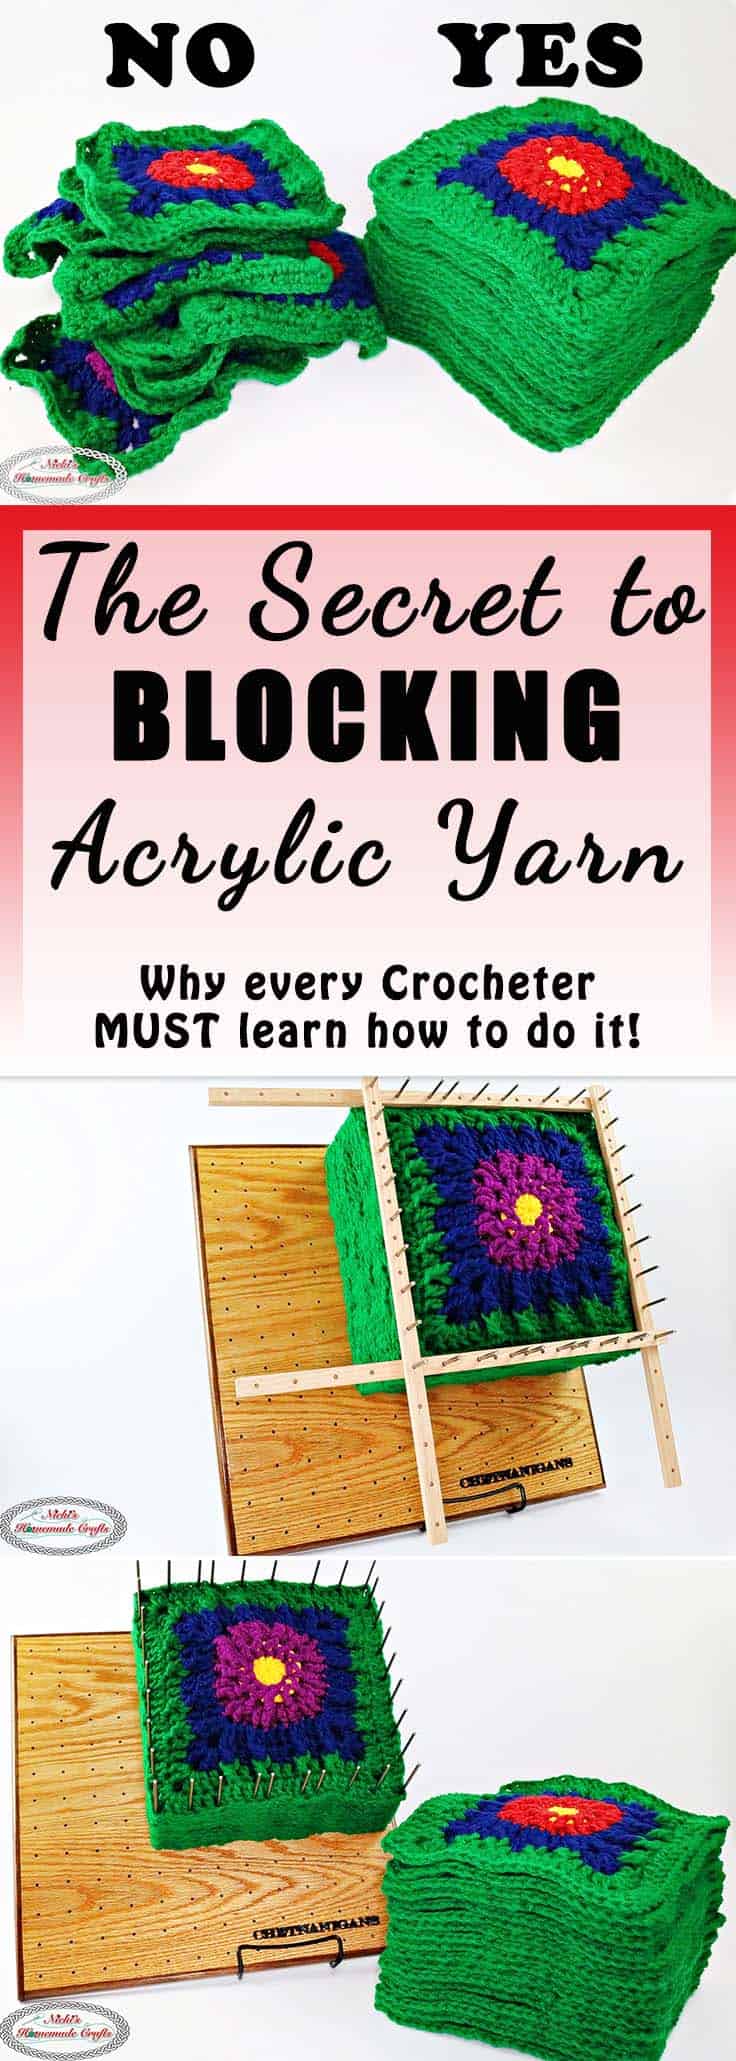 Crochet Blocking, When & How to Block Crochet